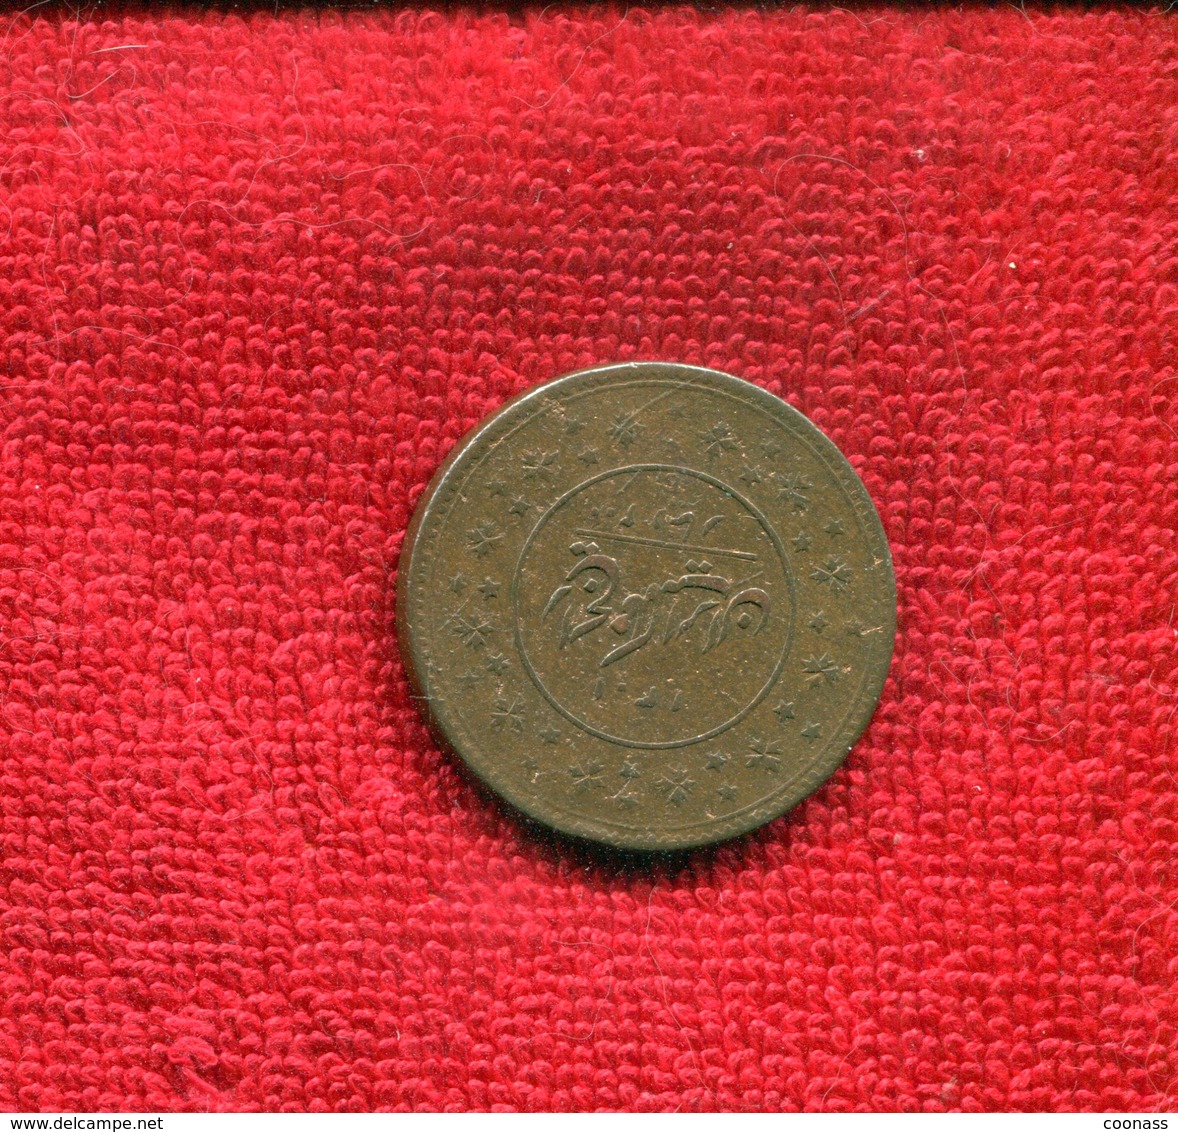 IRAN 200 DINARS AH 1301 1883 2 YEAR TYPE FINE NR 24.95 - Iran